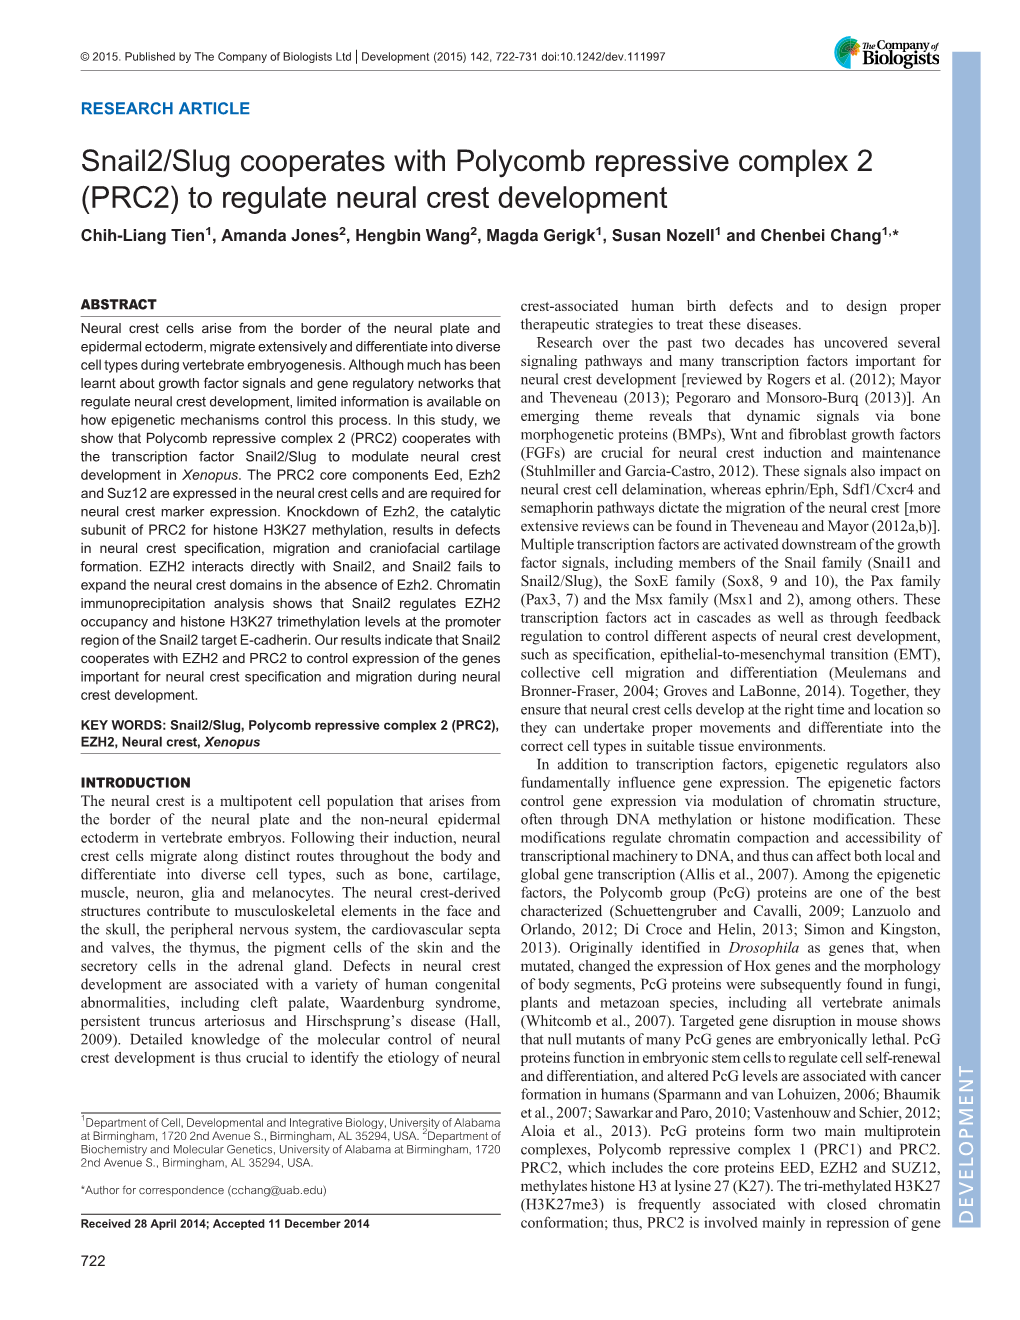 Snail2/Slug Cooperates with Polycomb Repressive Complex 2 (PRC2) to Regulate Neural Crest Development